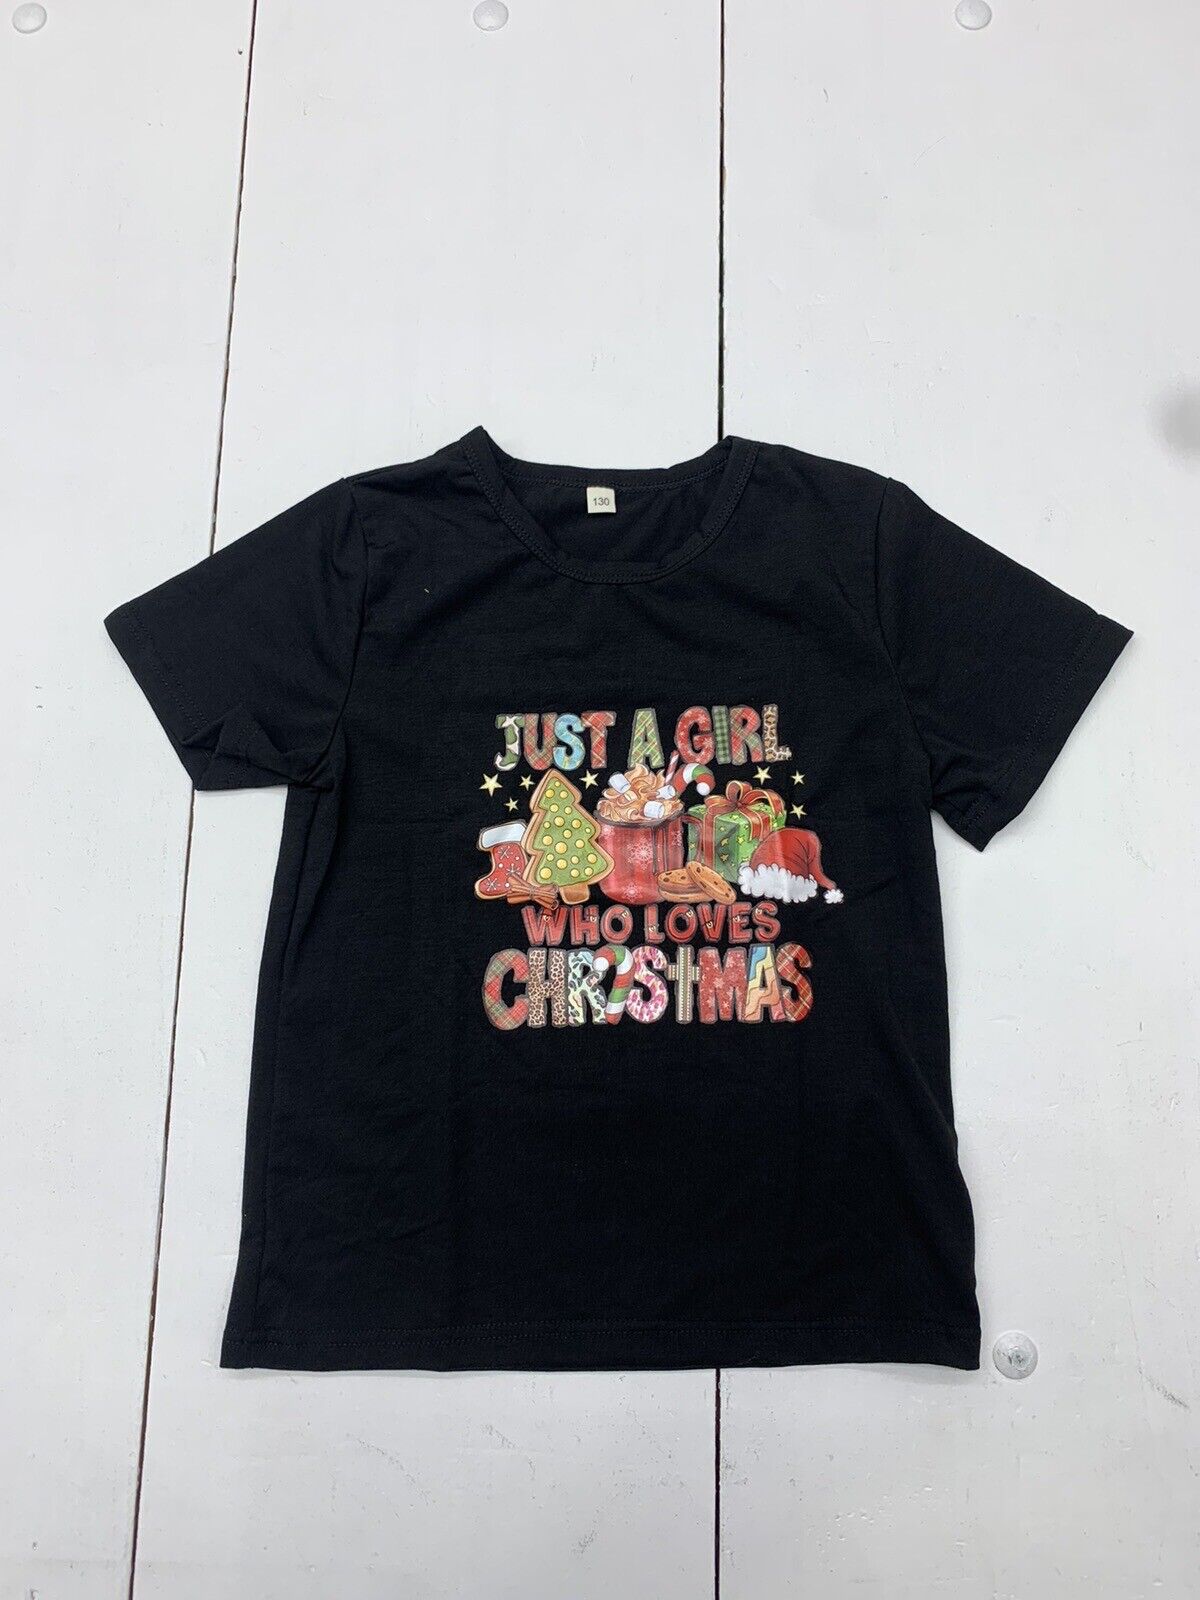 Girls Black Christmas Graphic Short Sleeve Shirt Size Medium